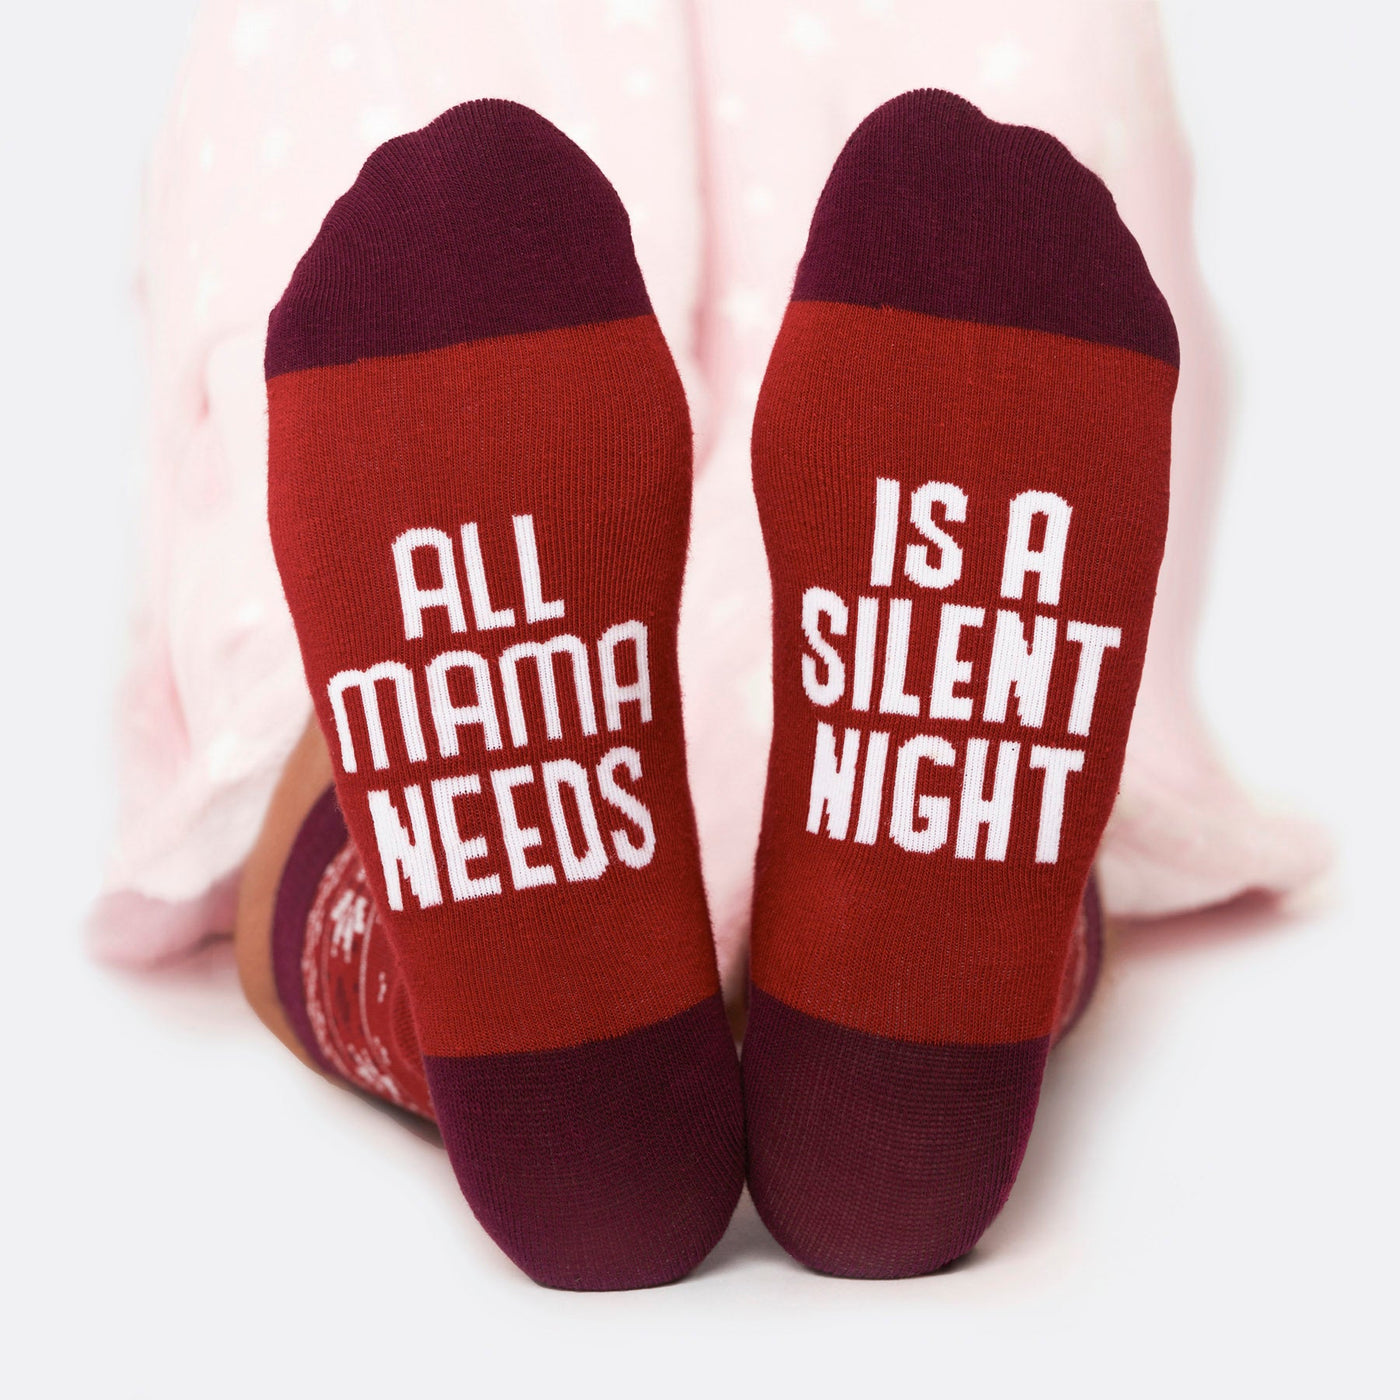 Silent Night Socks